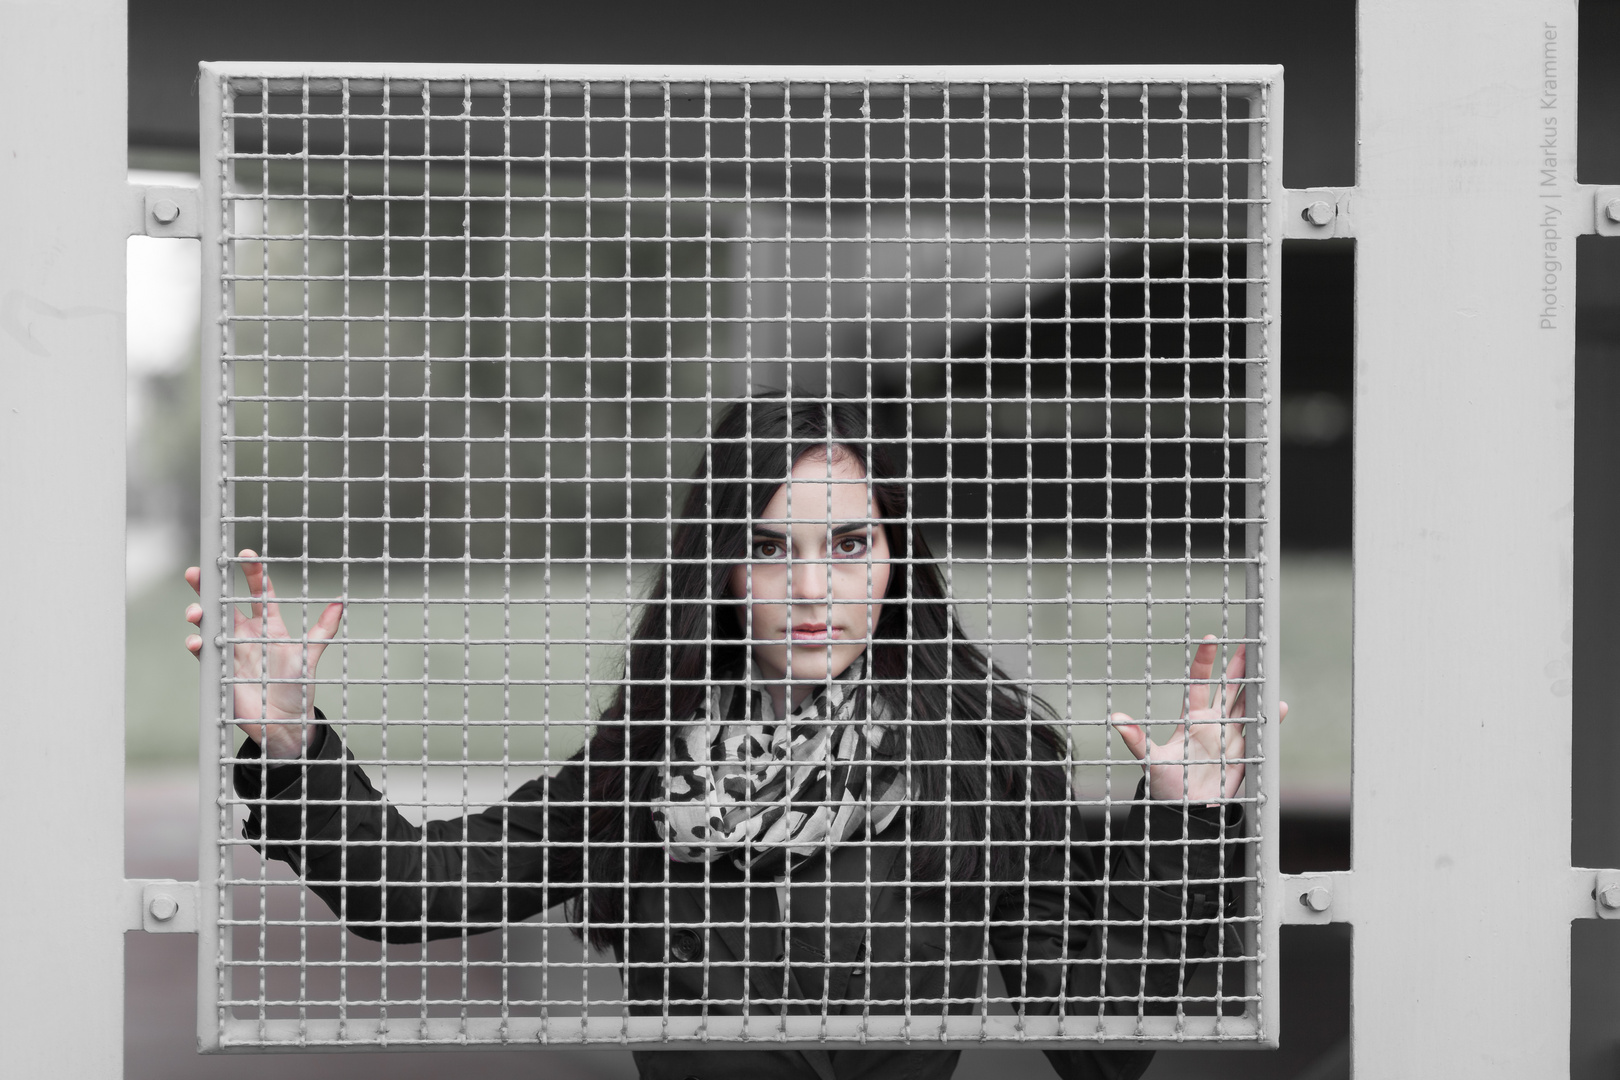 Sarah hinter Gitter #2